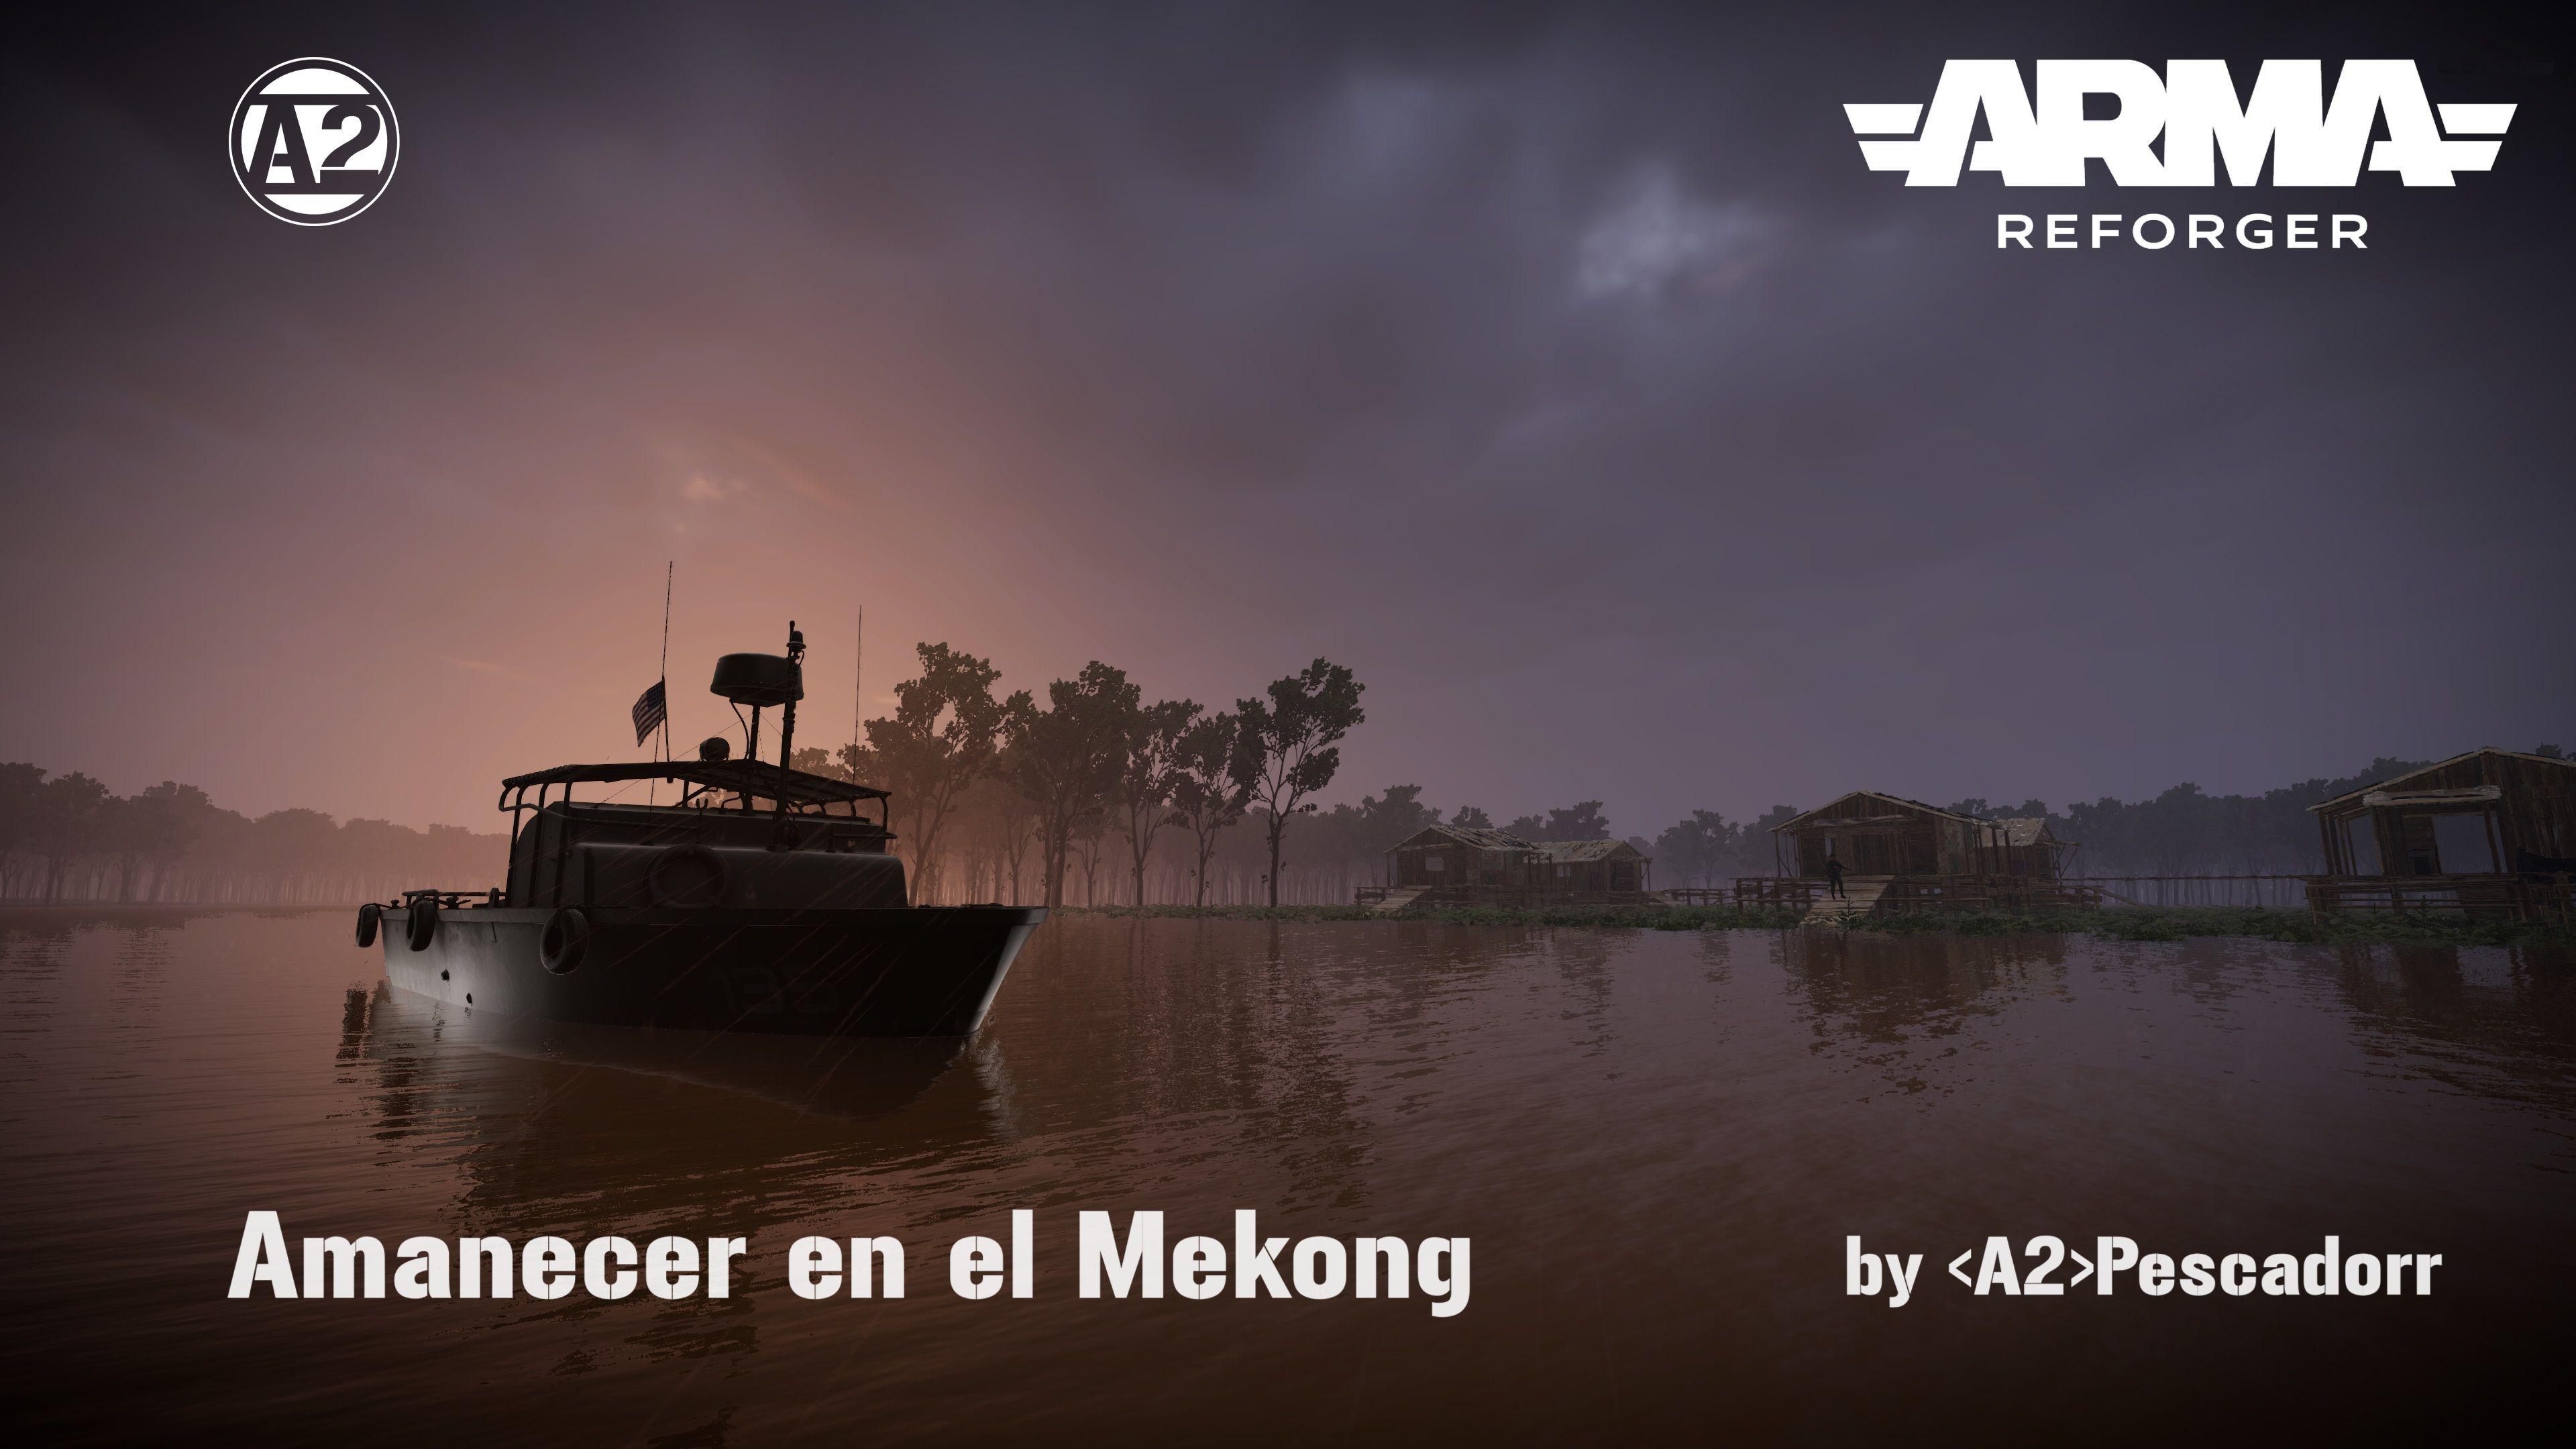 Coop Amanecer en el Mekong